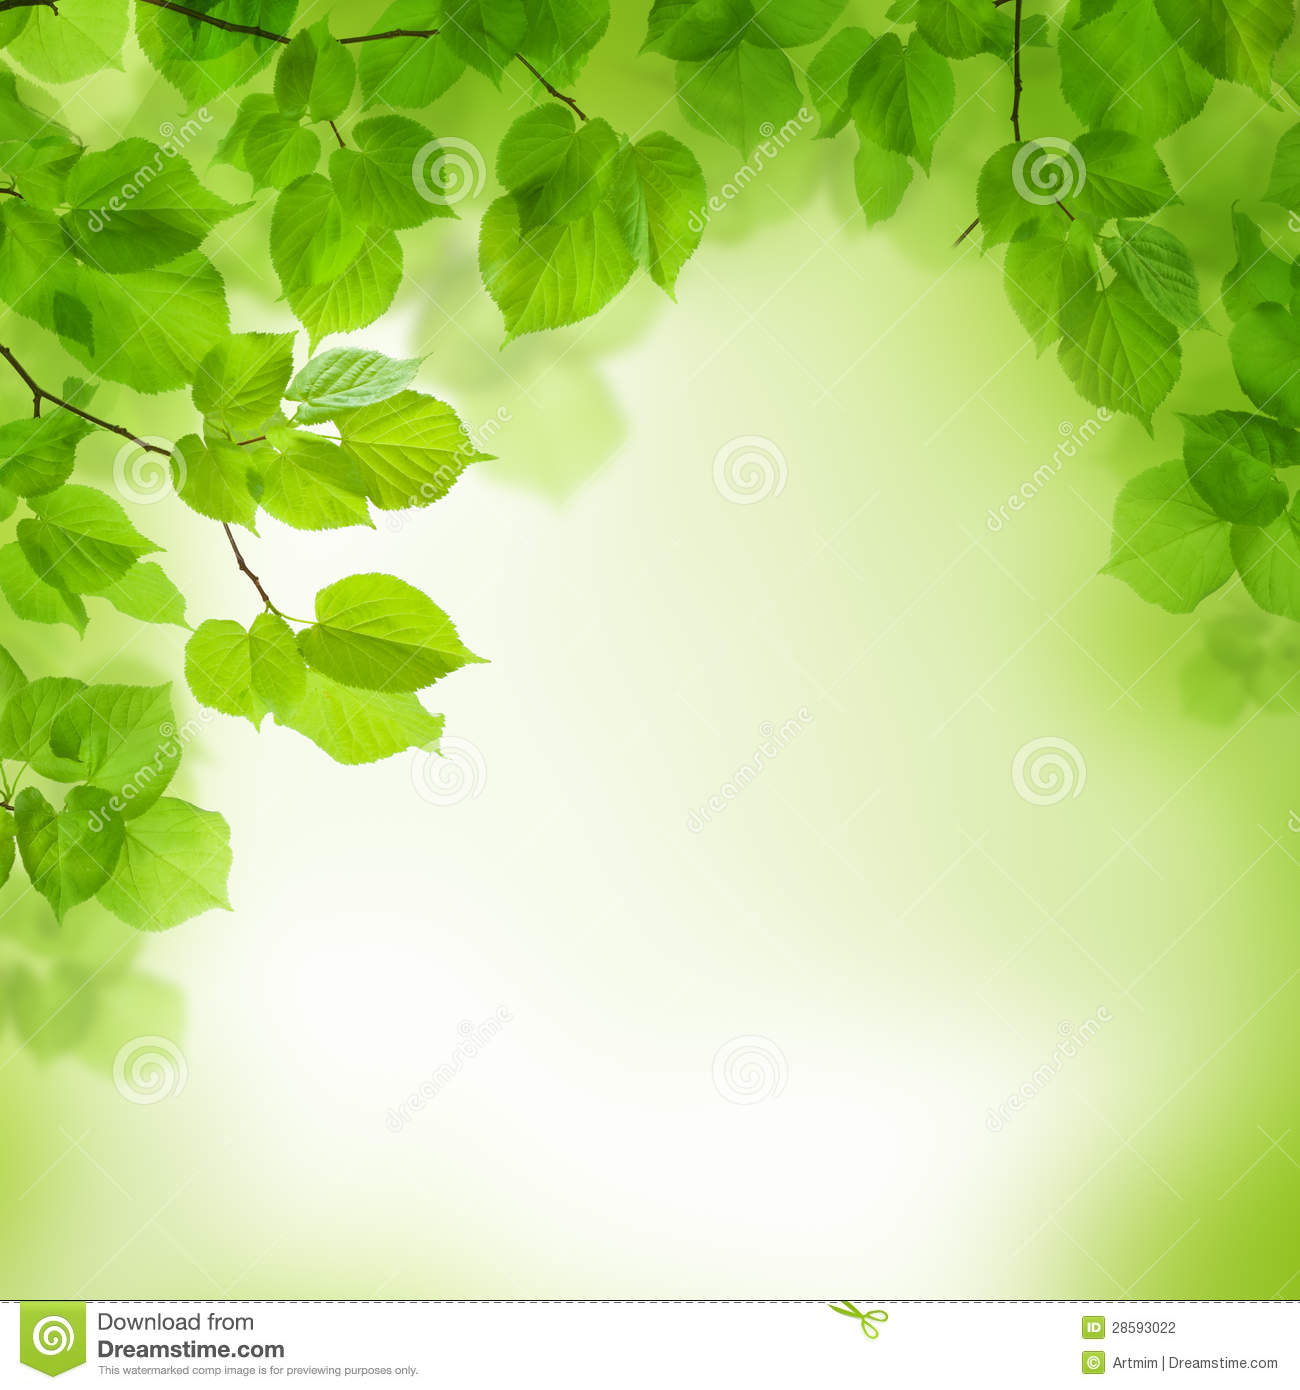 Green Leaf Wallpaper Border HD On Picsfair